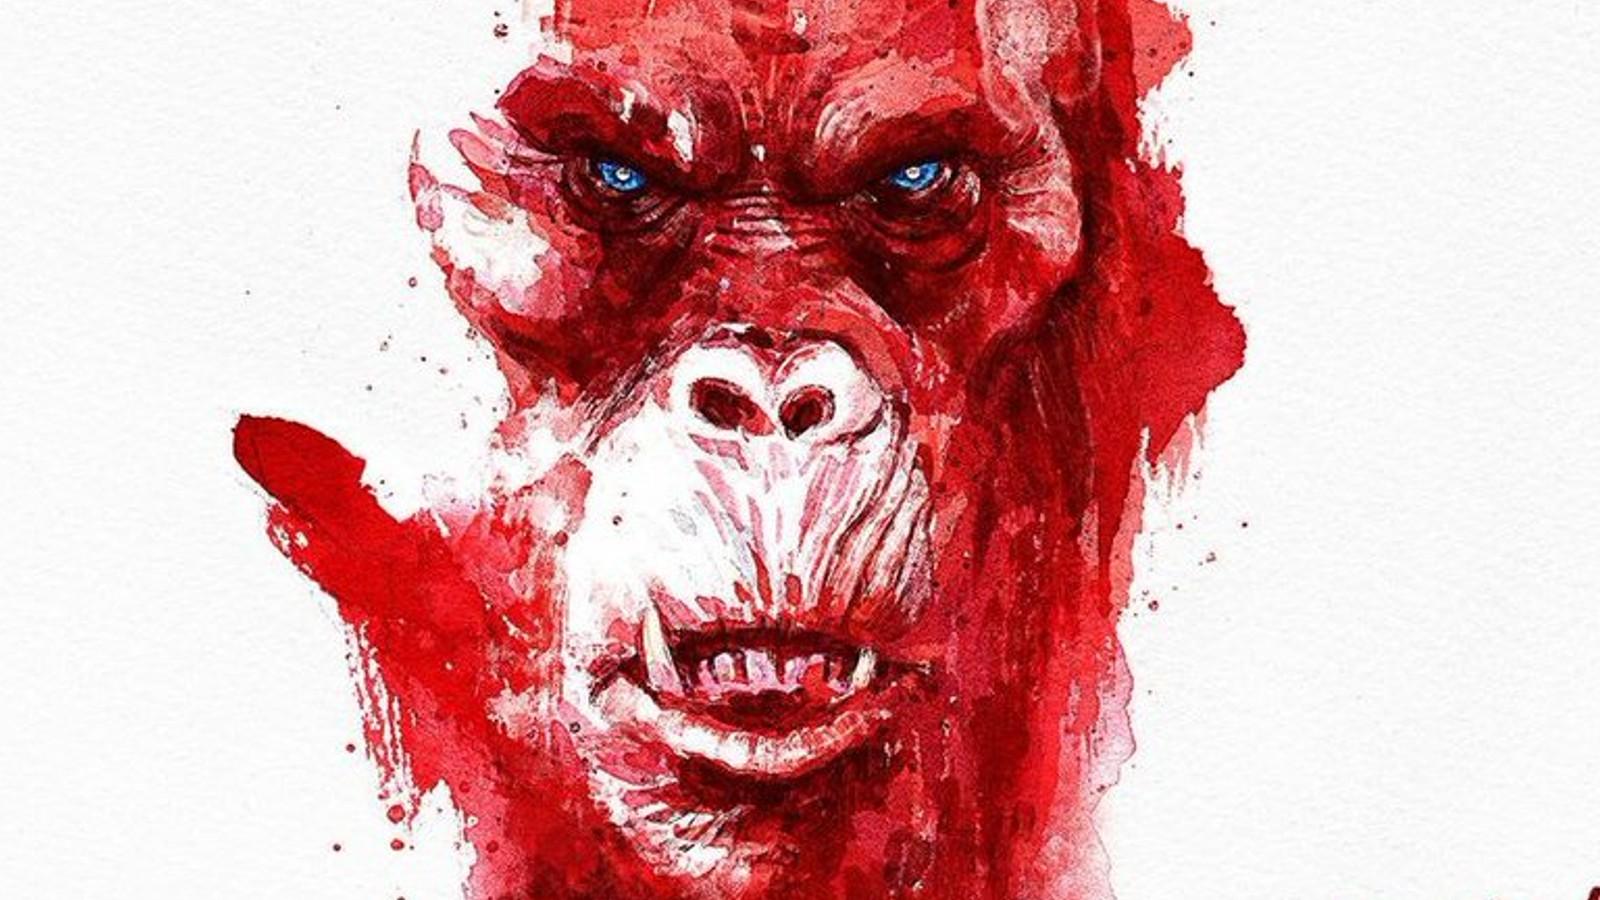 Red Skar King on the Godzilla x Kong poster.